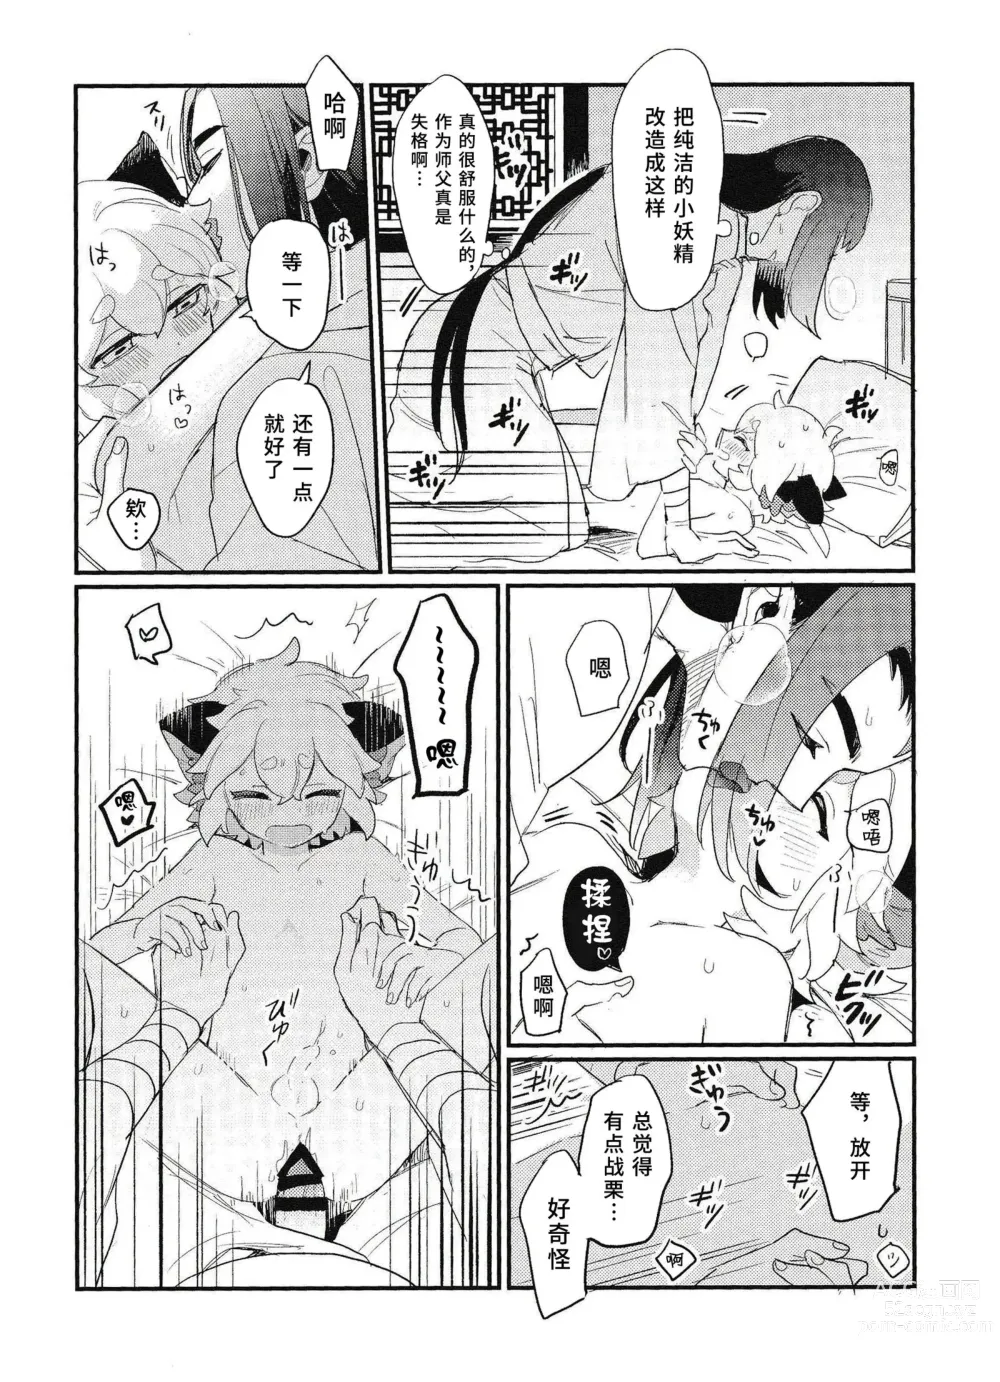 Page 16 of doujinshi 互相依偎她身体